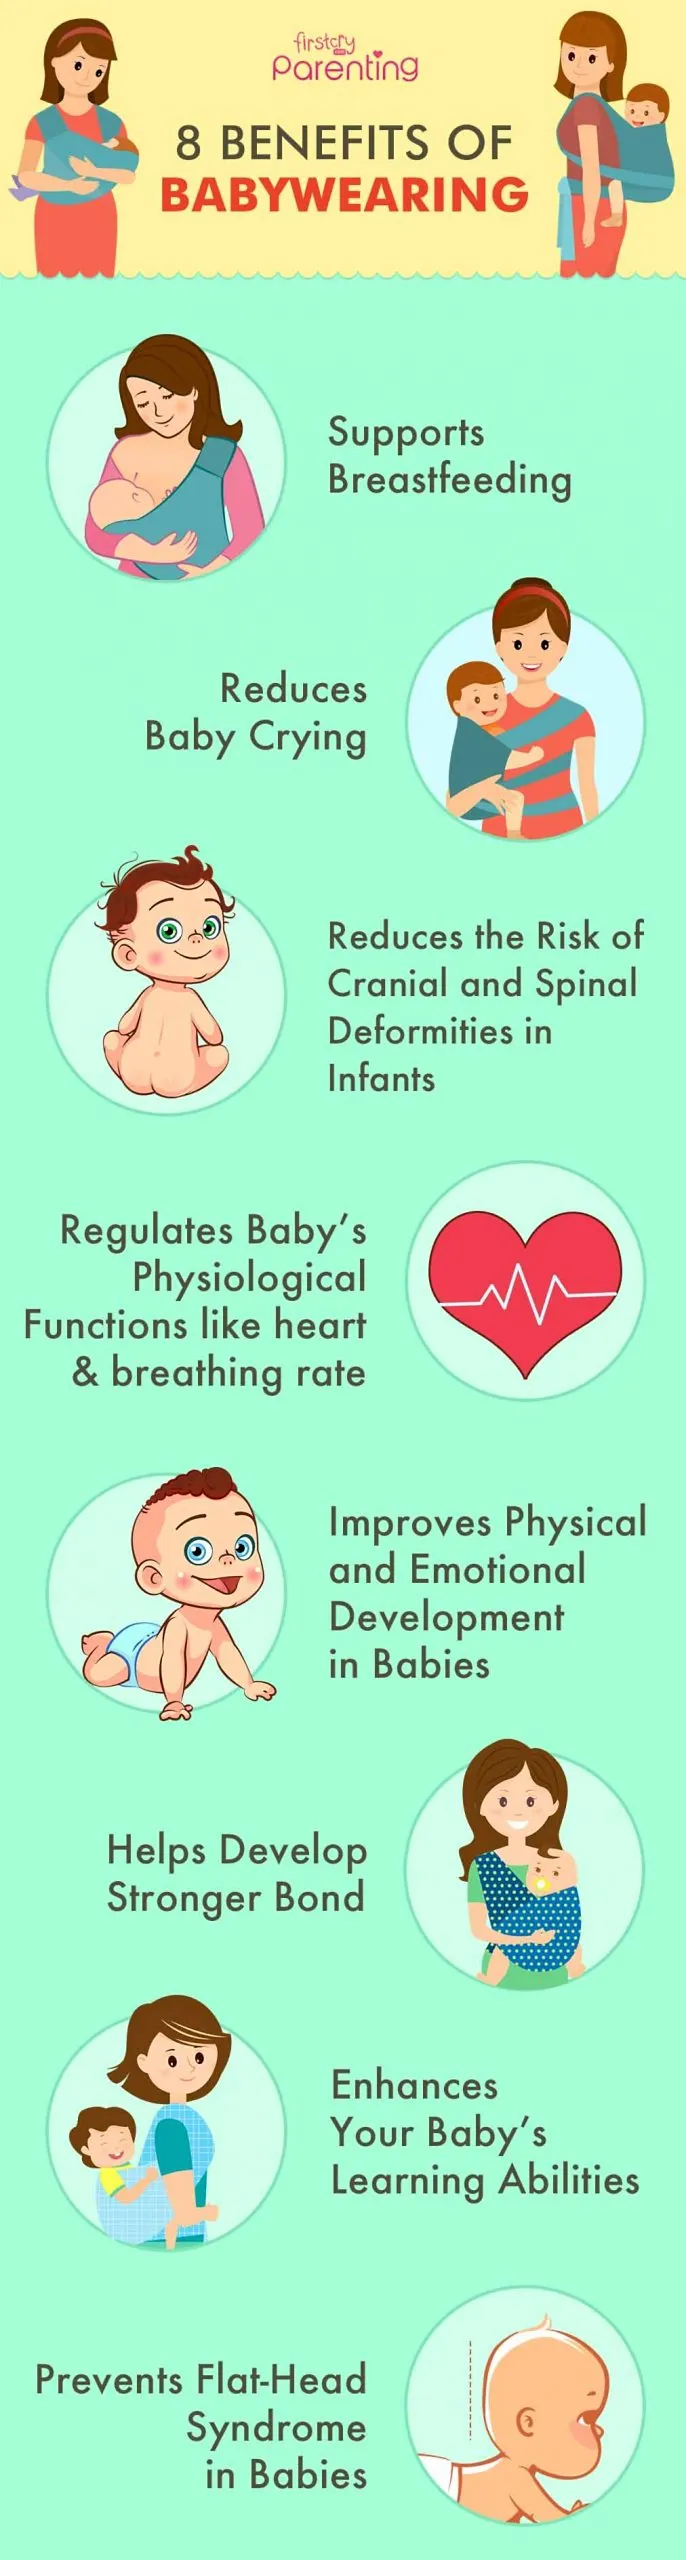 Benefits of Babywearing